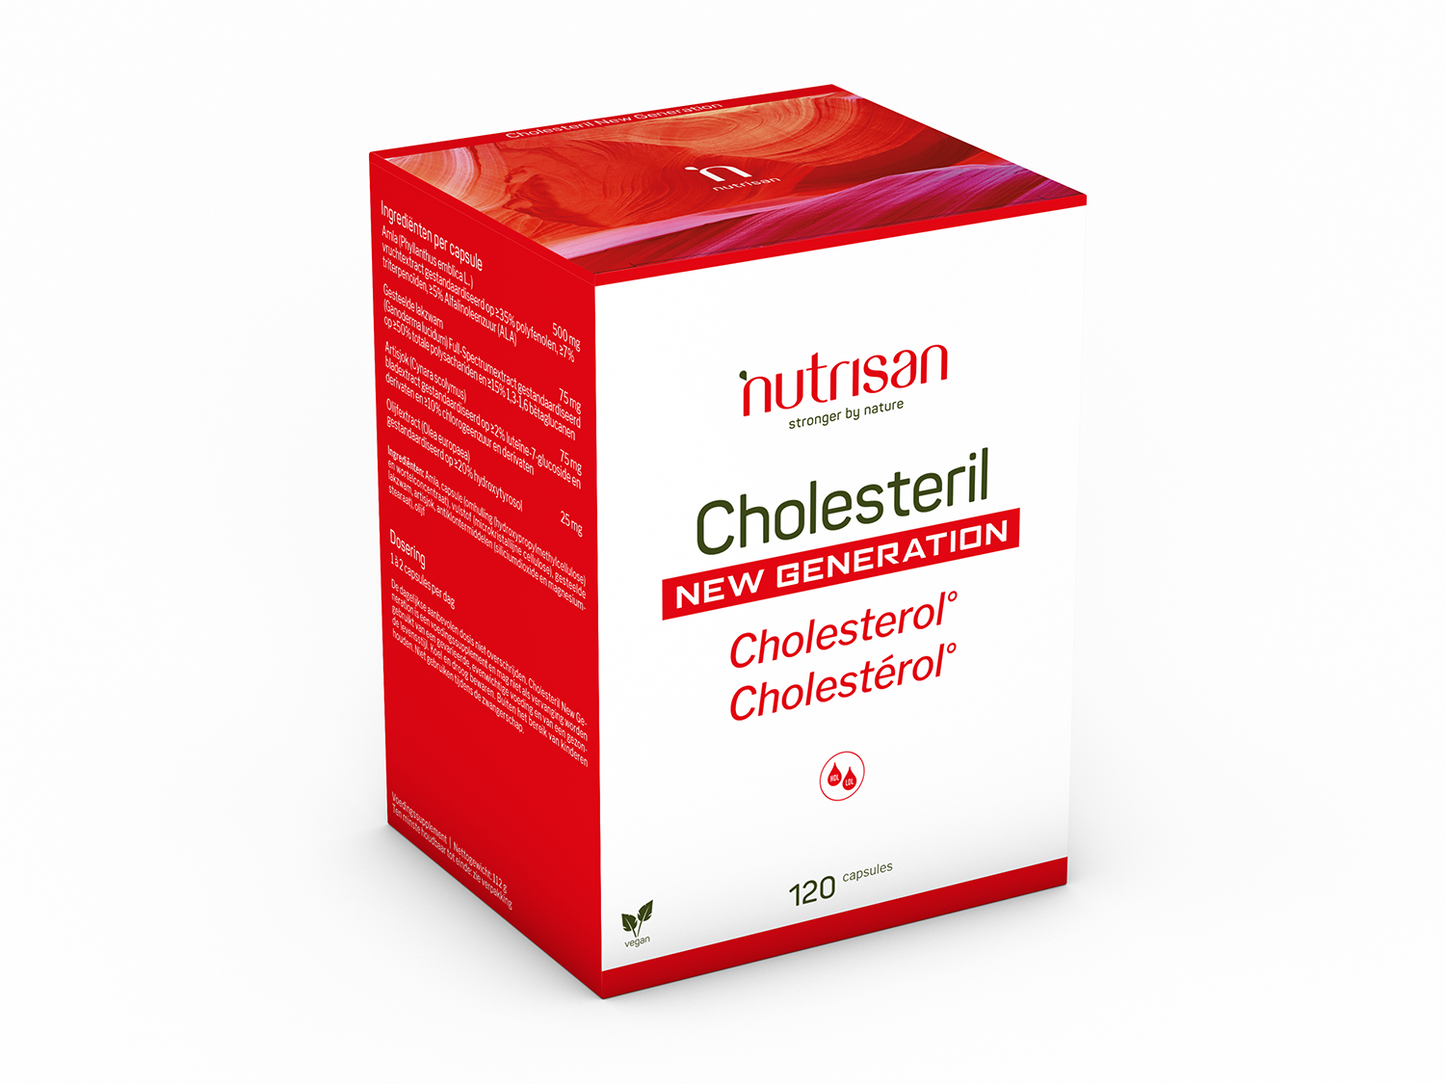 Nutrisan Cholesteril New Generation - Supplement voor cholesterol